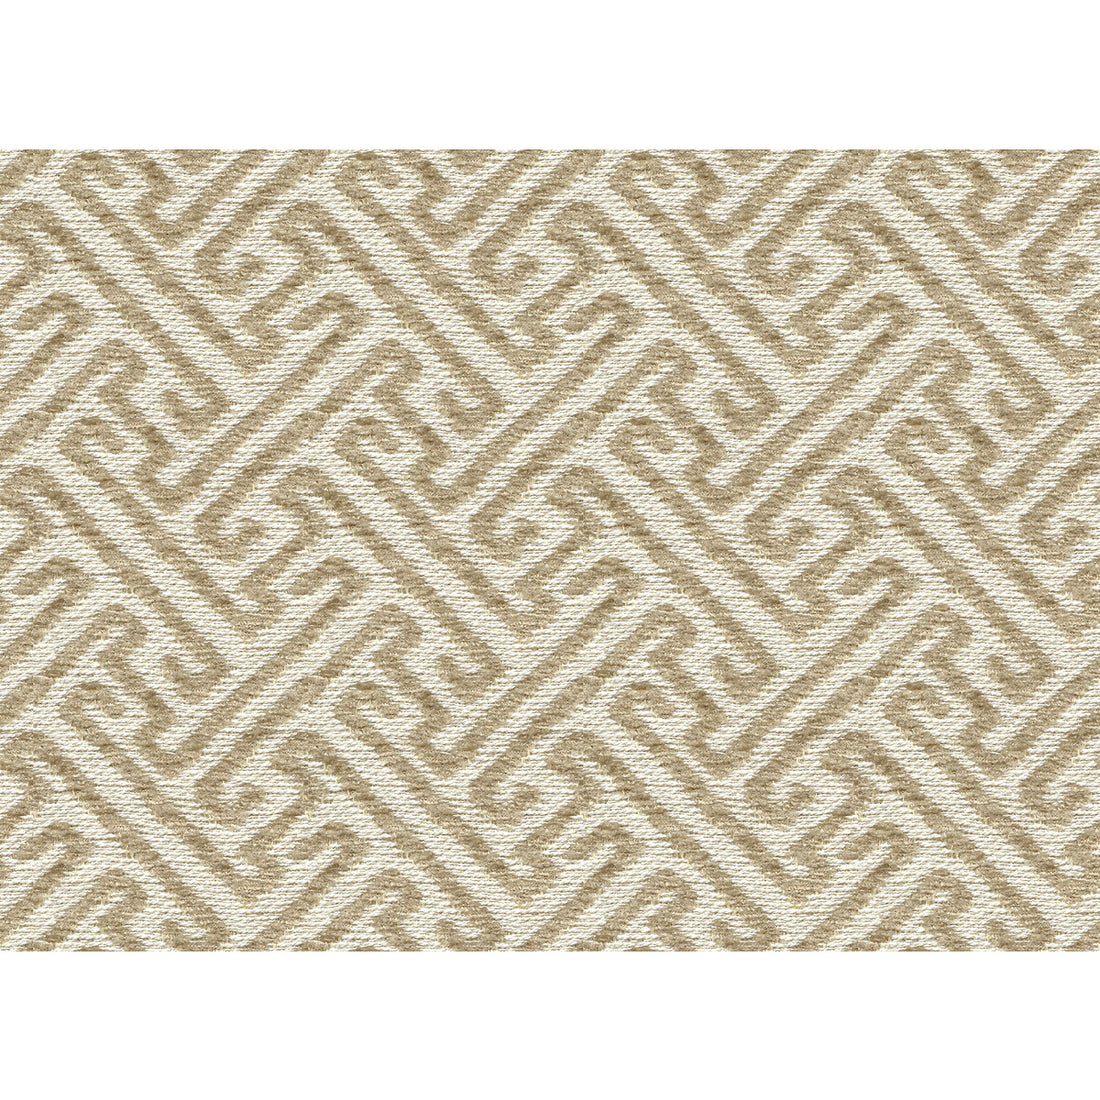 Kravet Smart fabric in 30698-116 color - pattern 30698.116.0 - by Kravet Smart